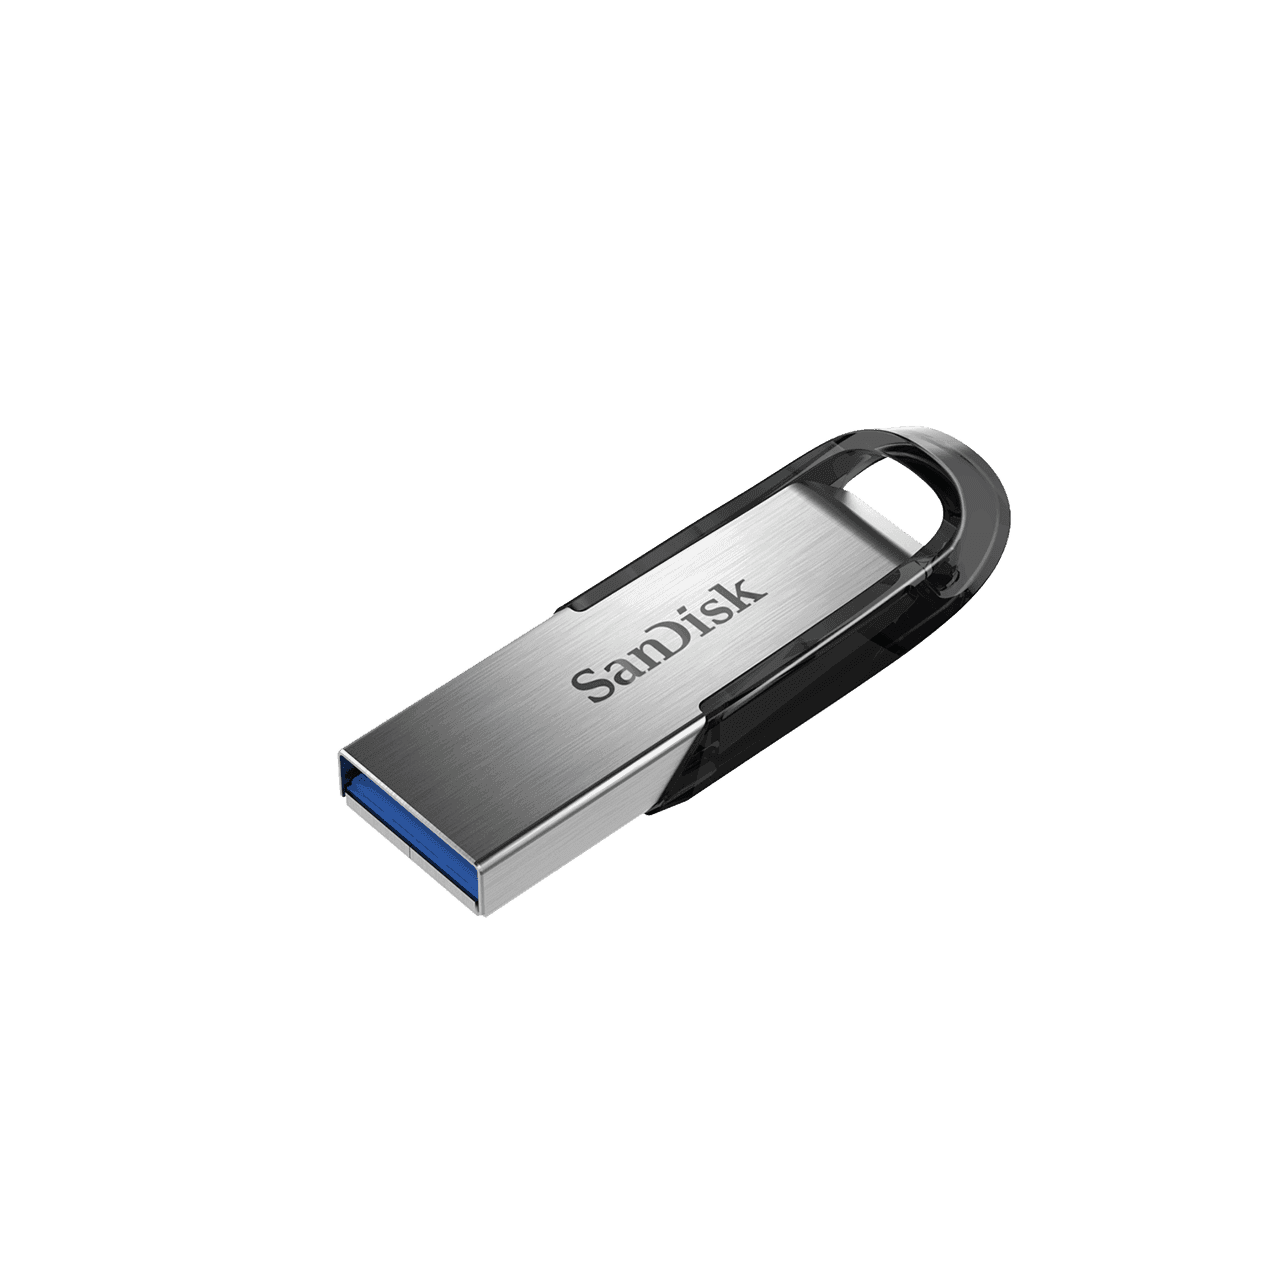 SANDISK 16GB ULTRA FLAIR USB3.0 FLASH DRIVE